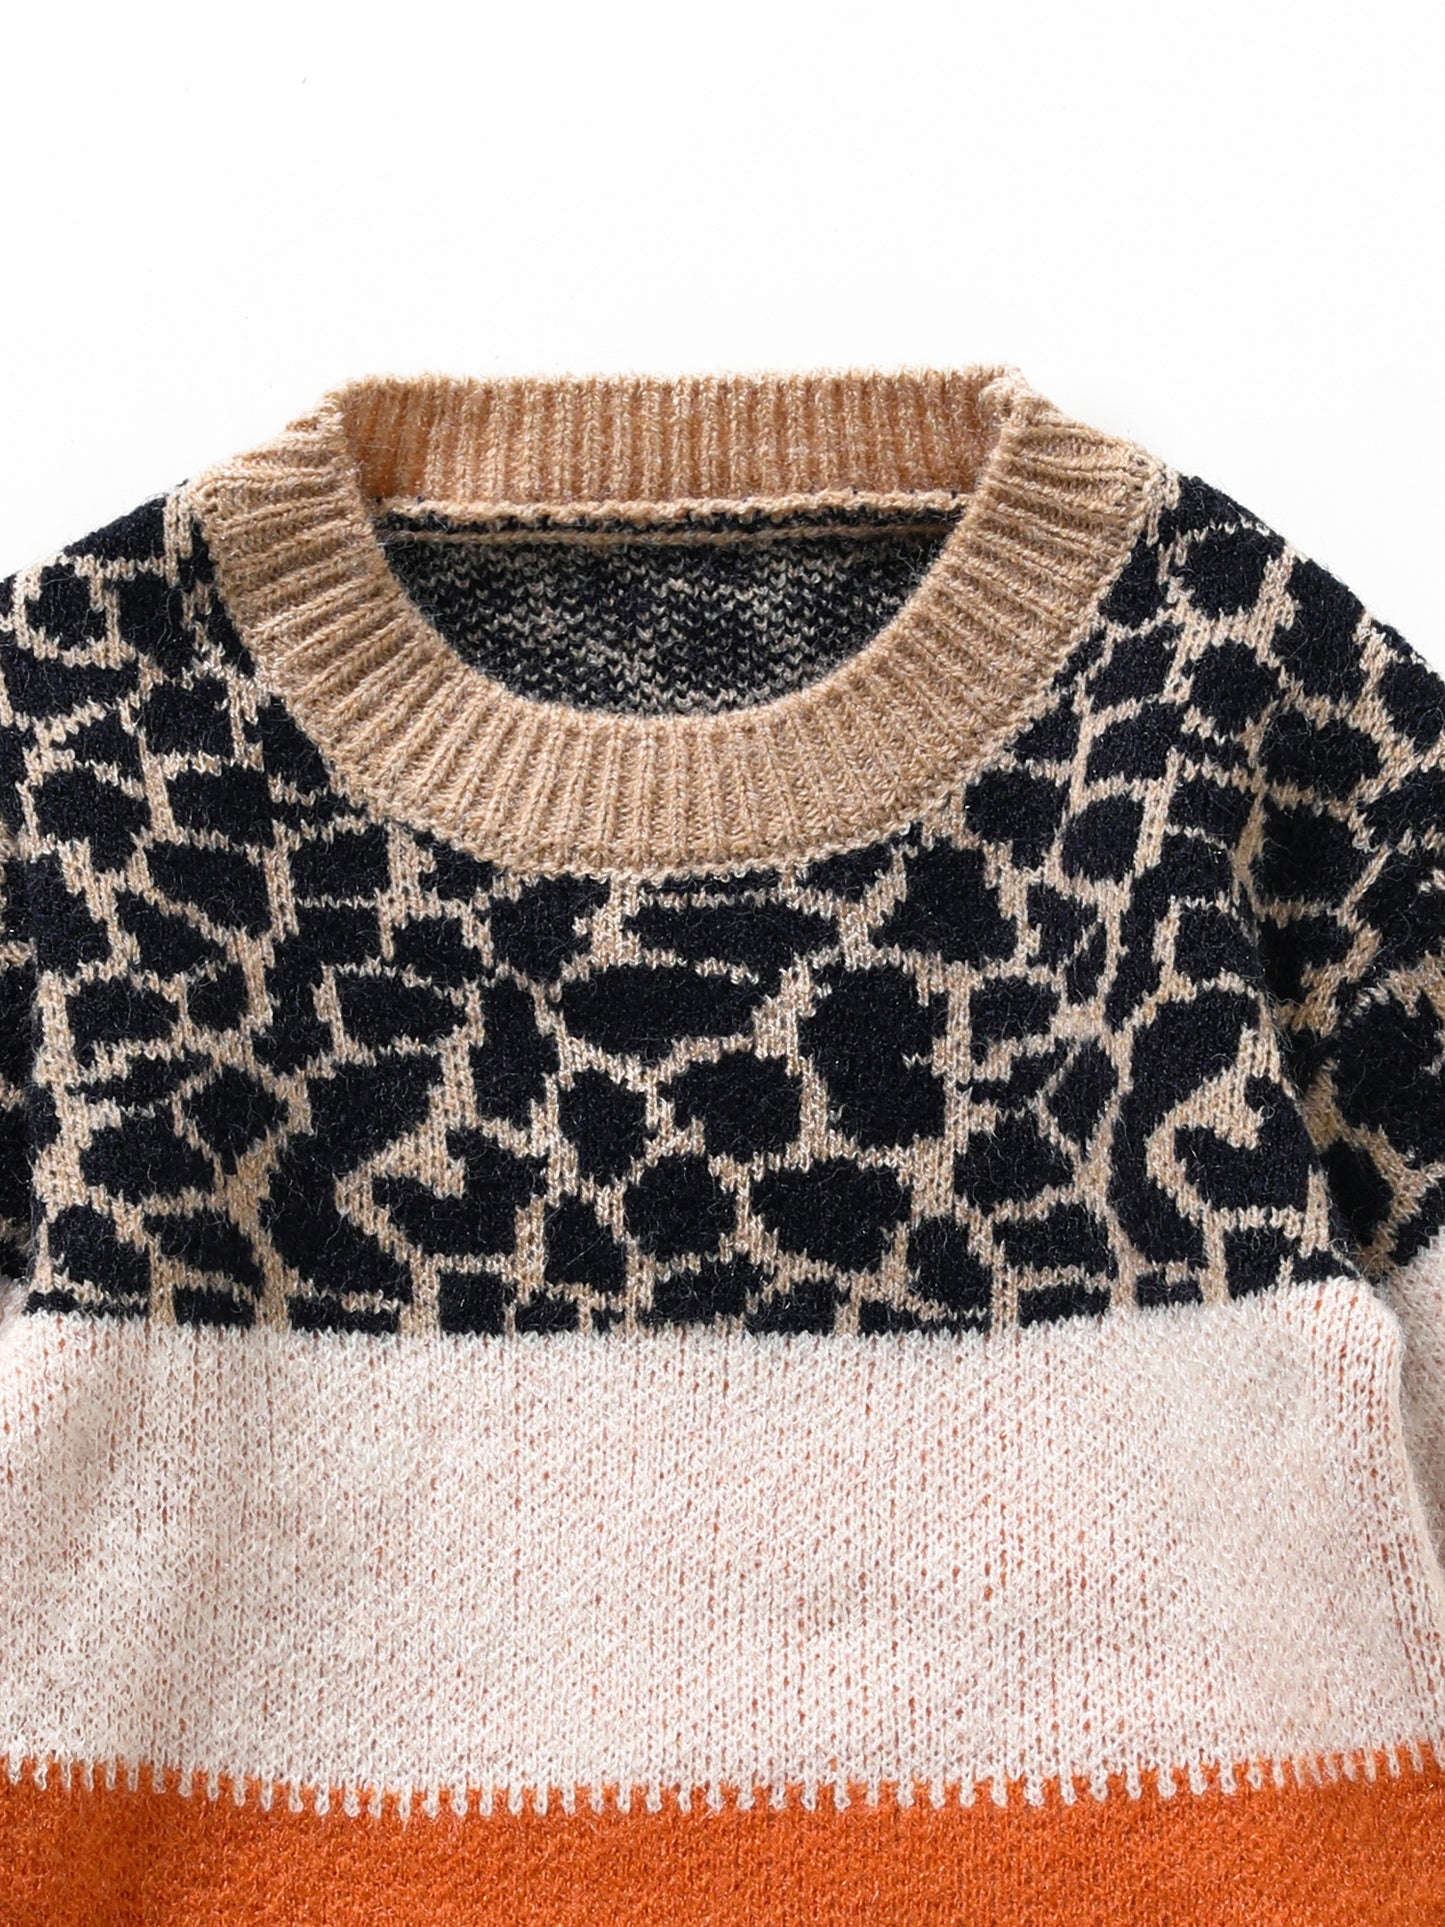 Girls Leopard Patchwork Winter Sweater